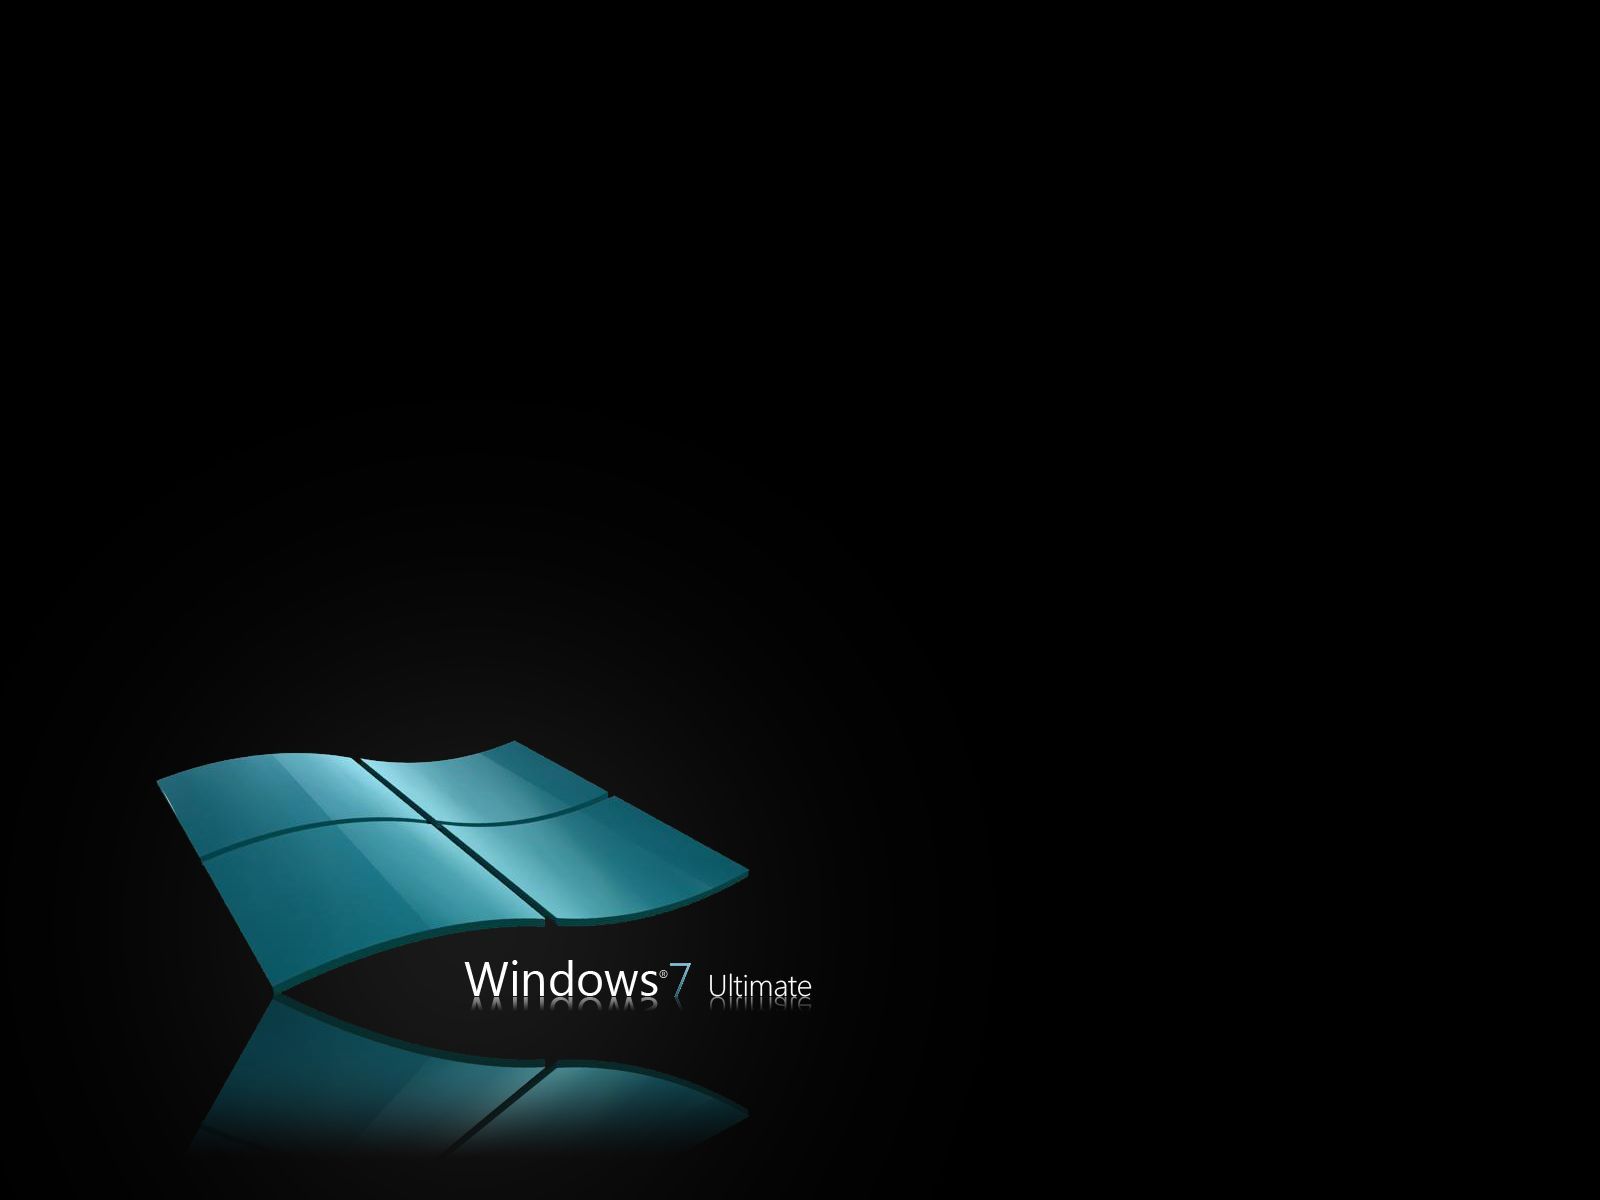 Windows Ultimate Desktop Background Wallpaper